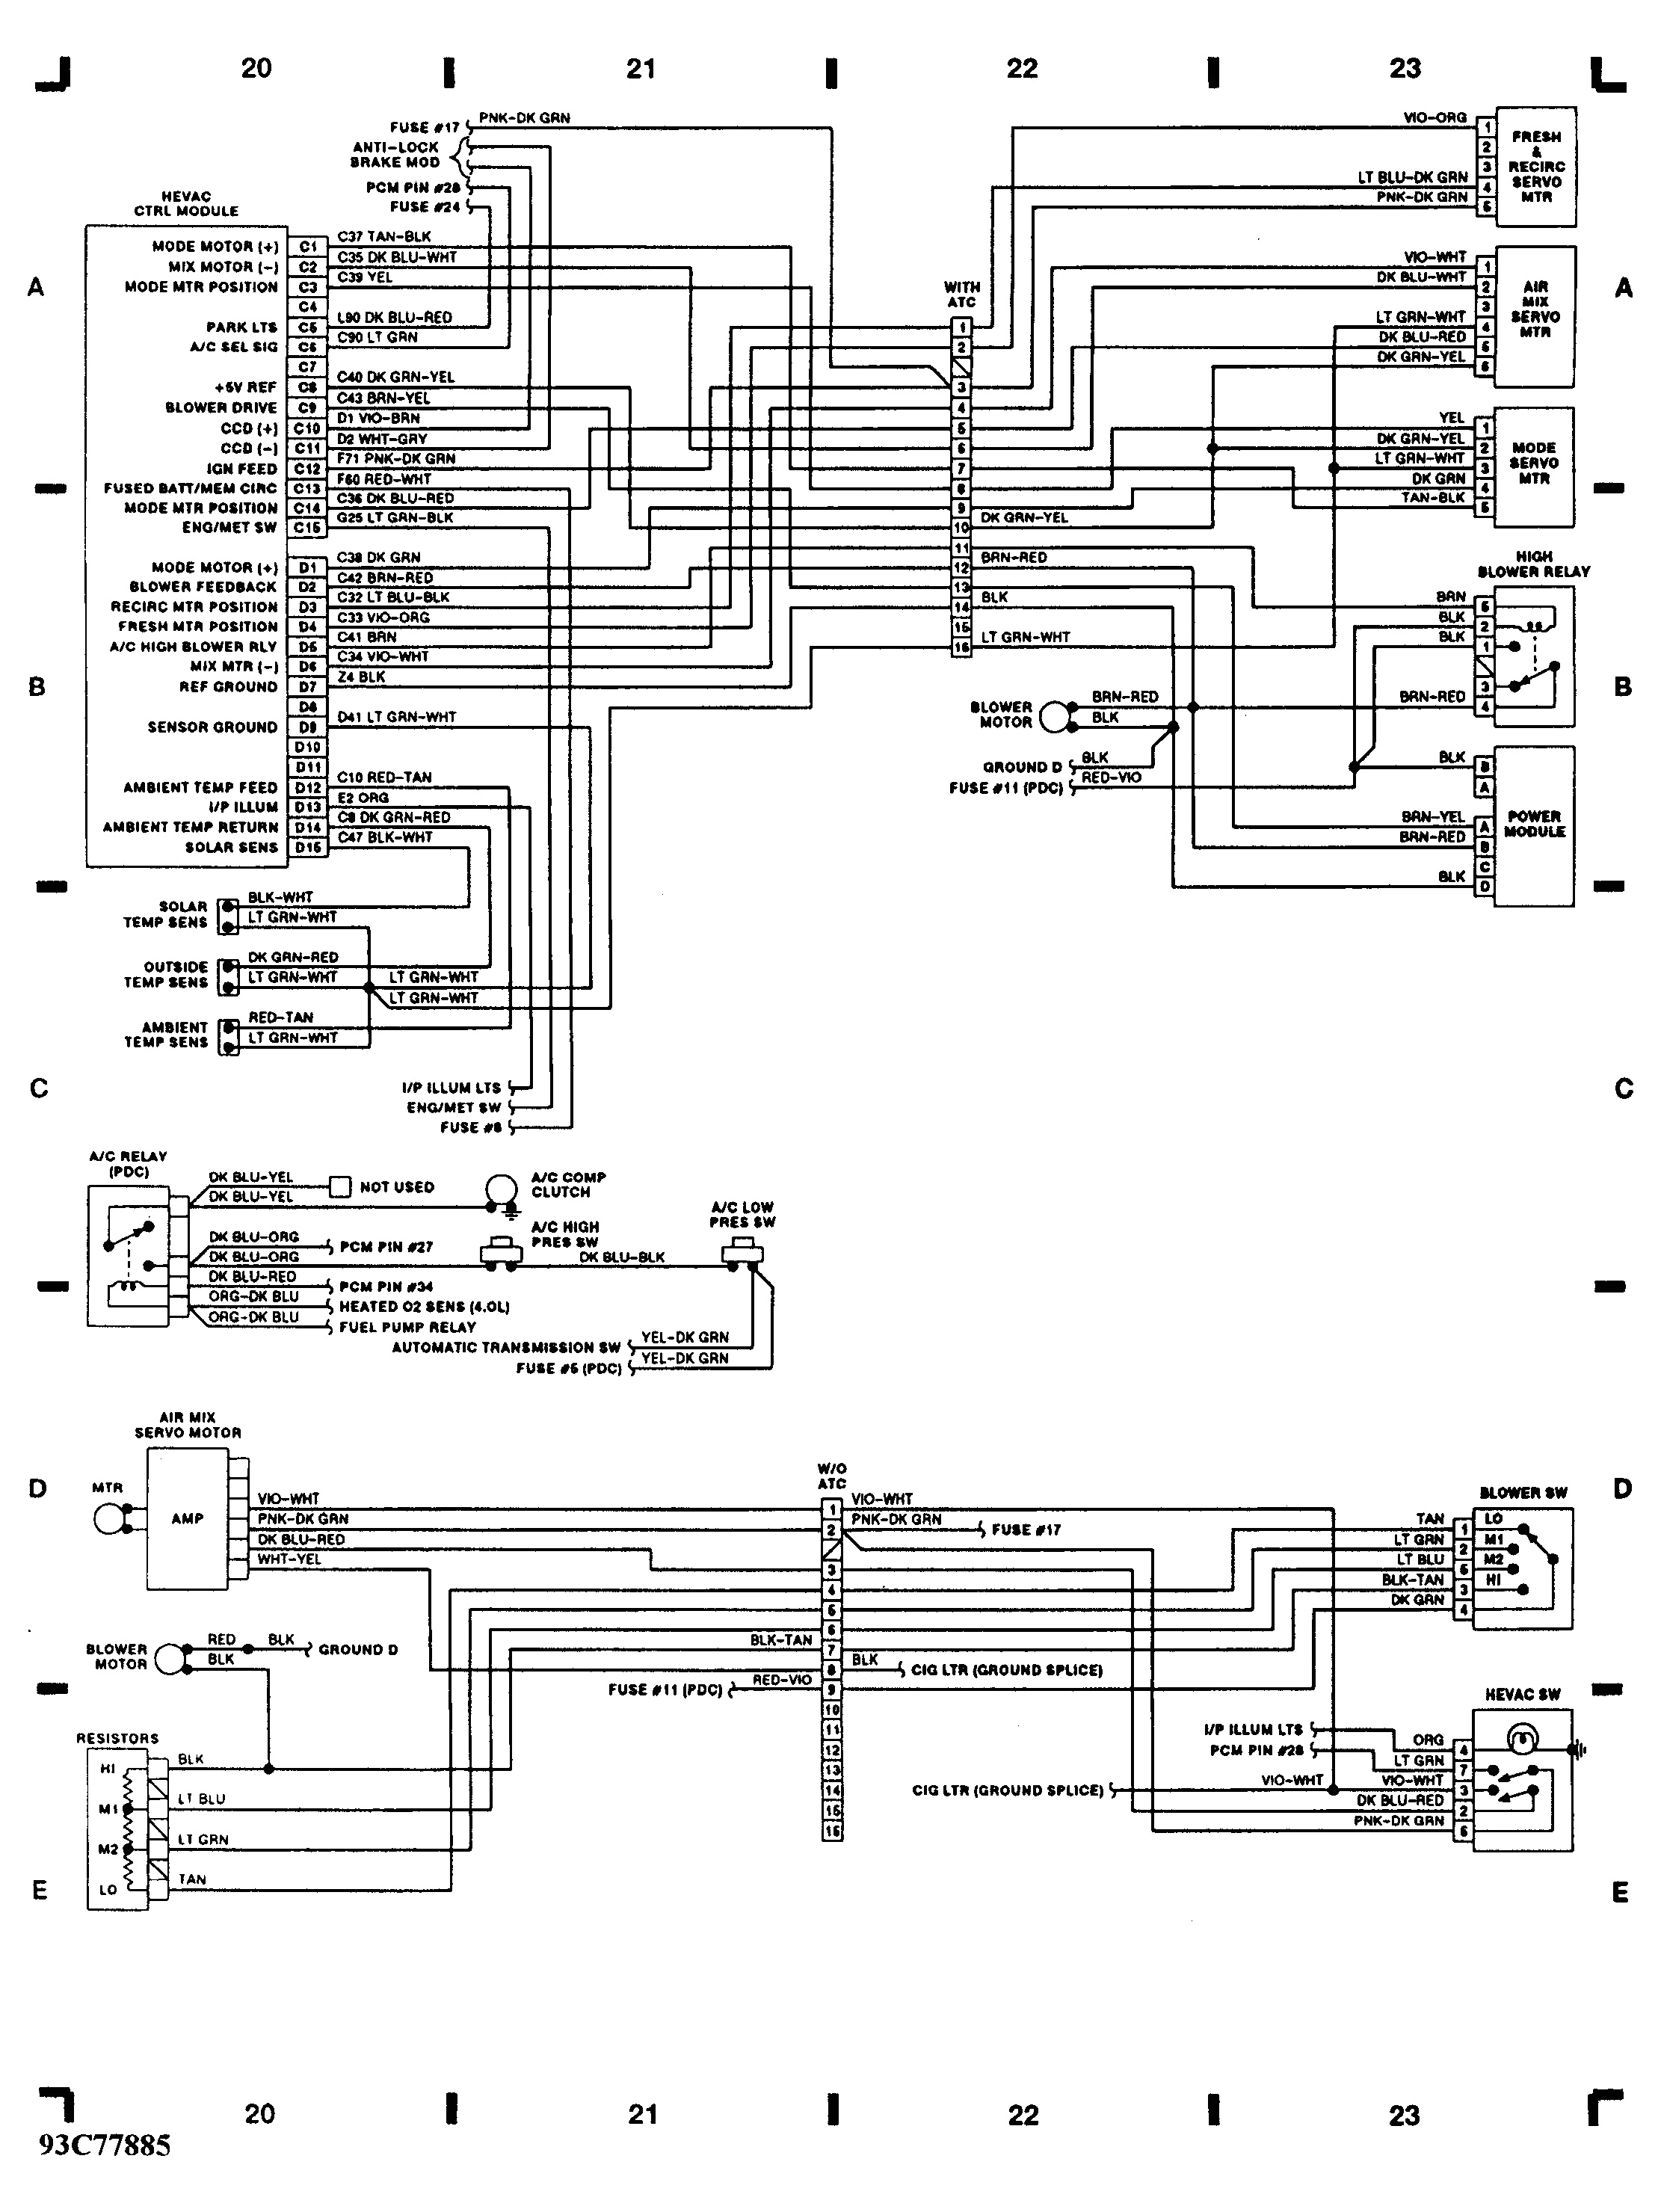 d12 wiring diagram wiring diagrams konsult volvo d12 ecm wiring diagram d12 wiring diagram